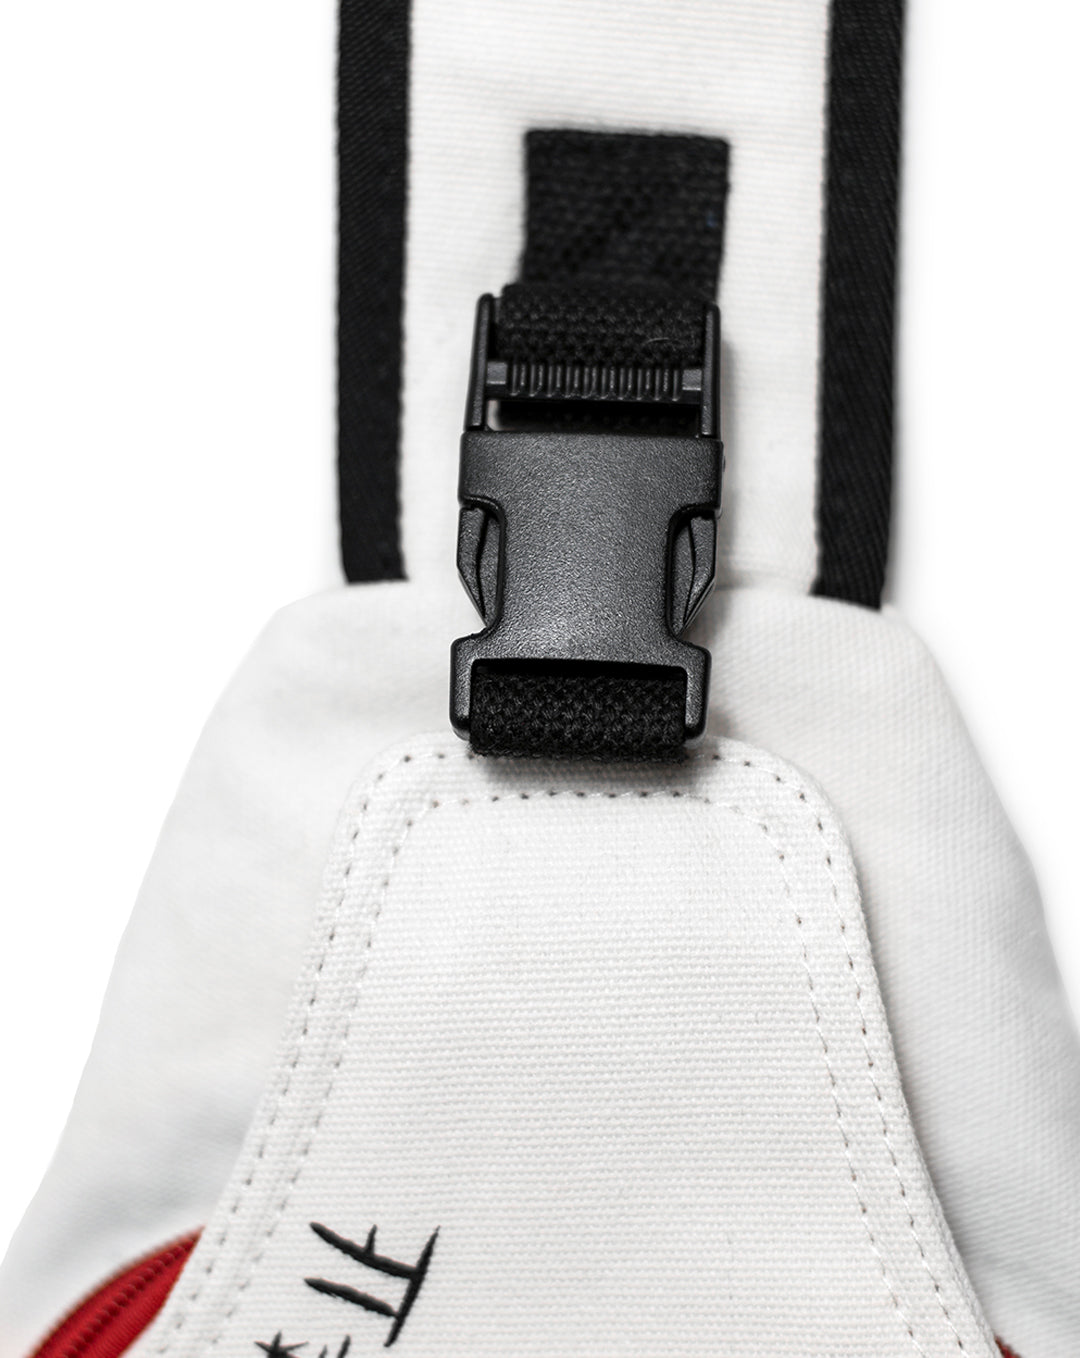 BXU LV 055 Small White Sling Bag – Onlykikaybox